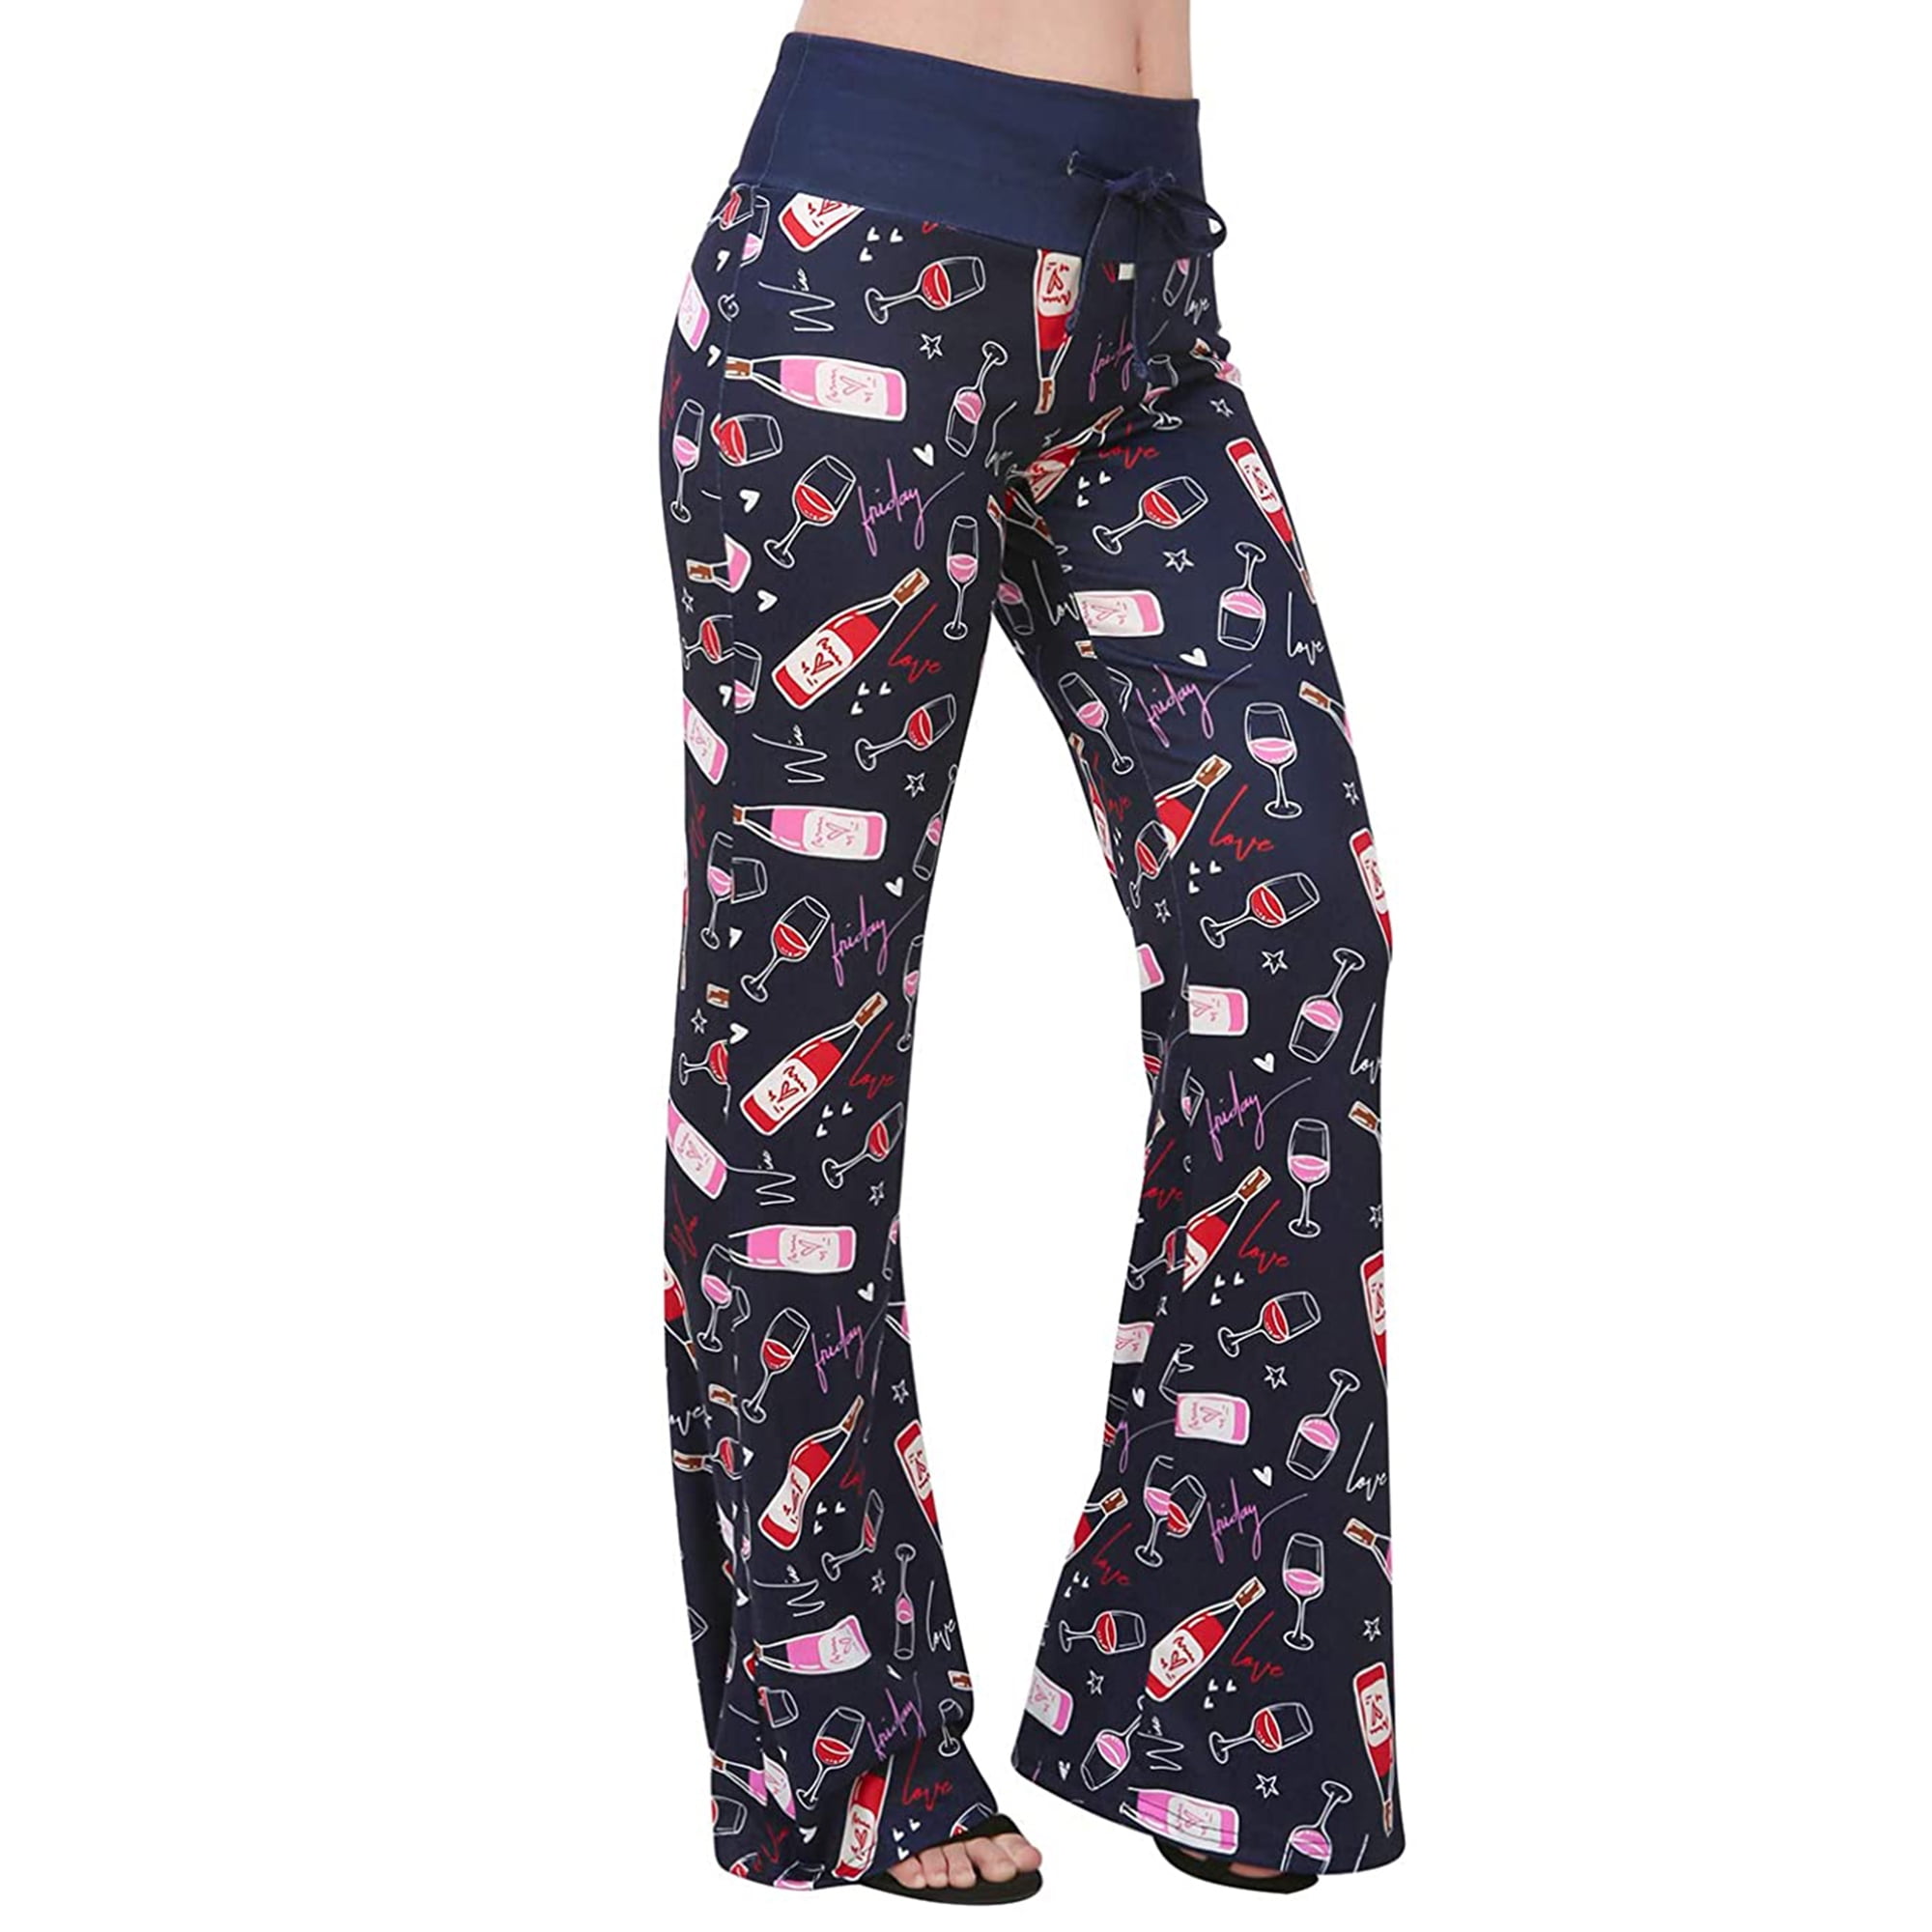 HDE Pajama Pants for Women PJ Pants Comfy Loungewear Fun Wine Glass 4X Plus  